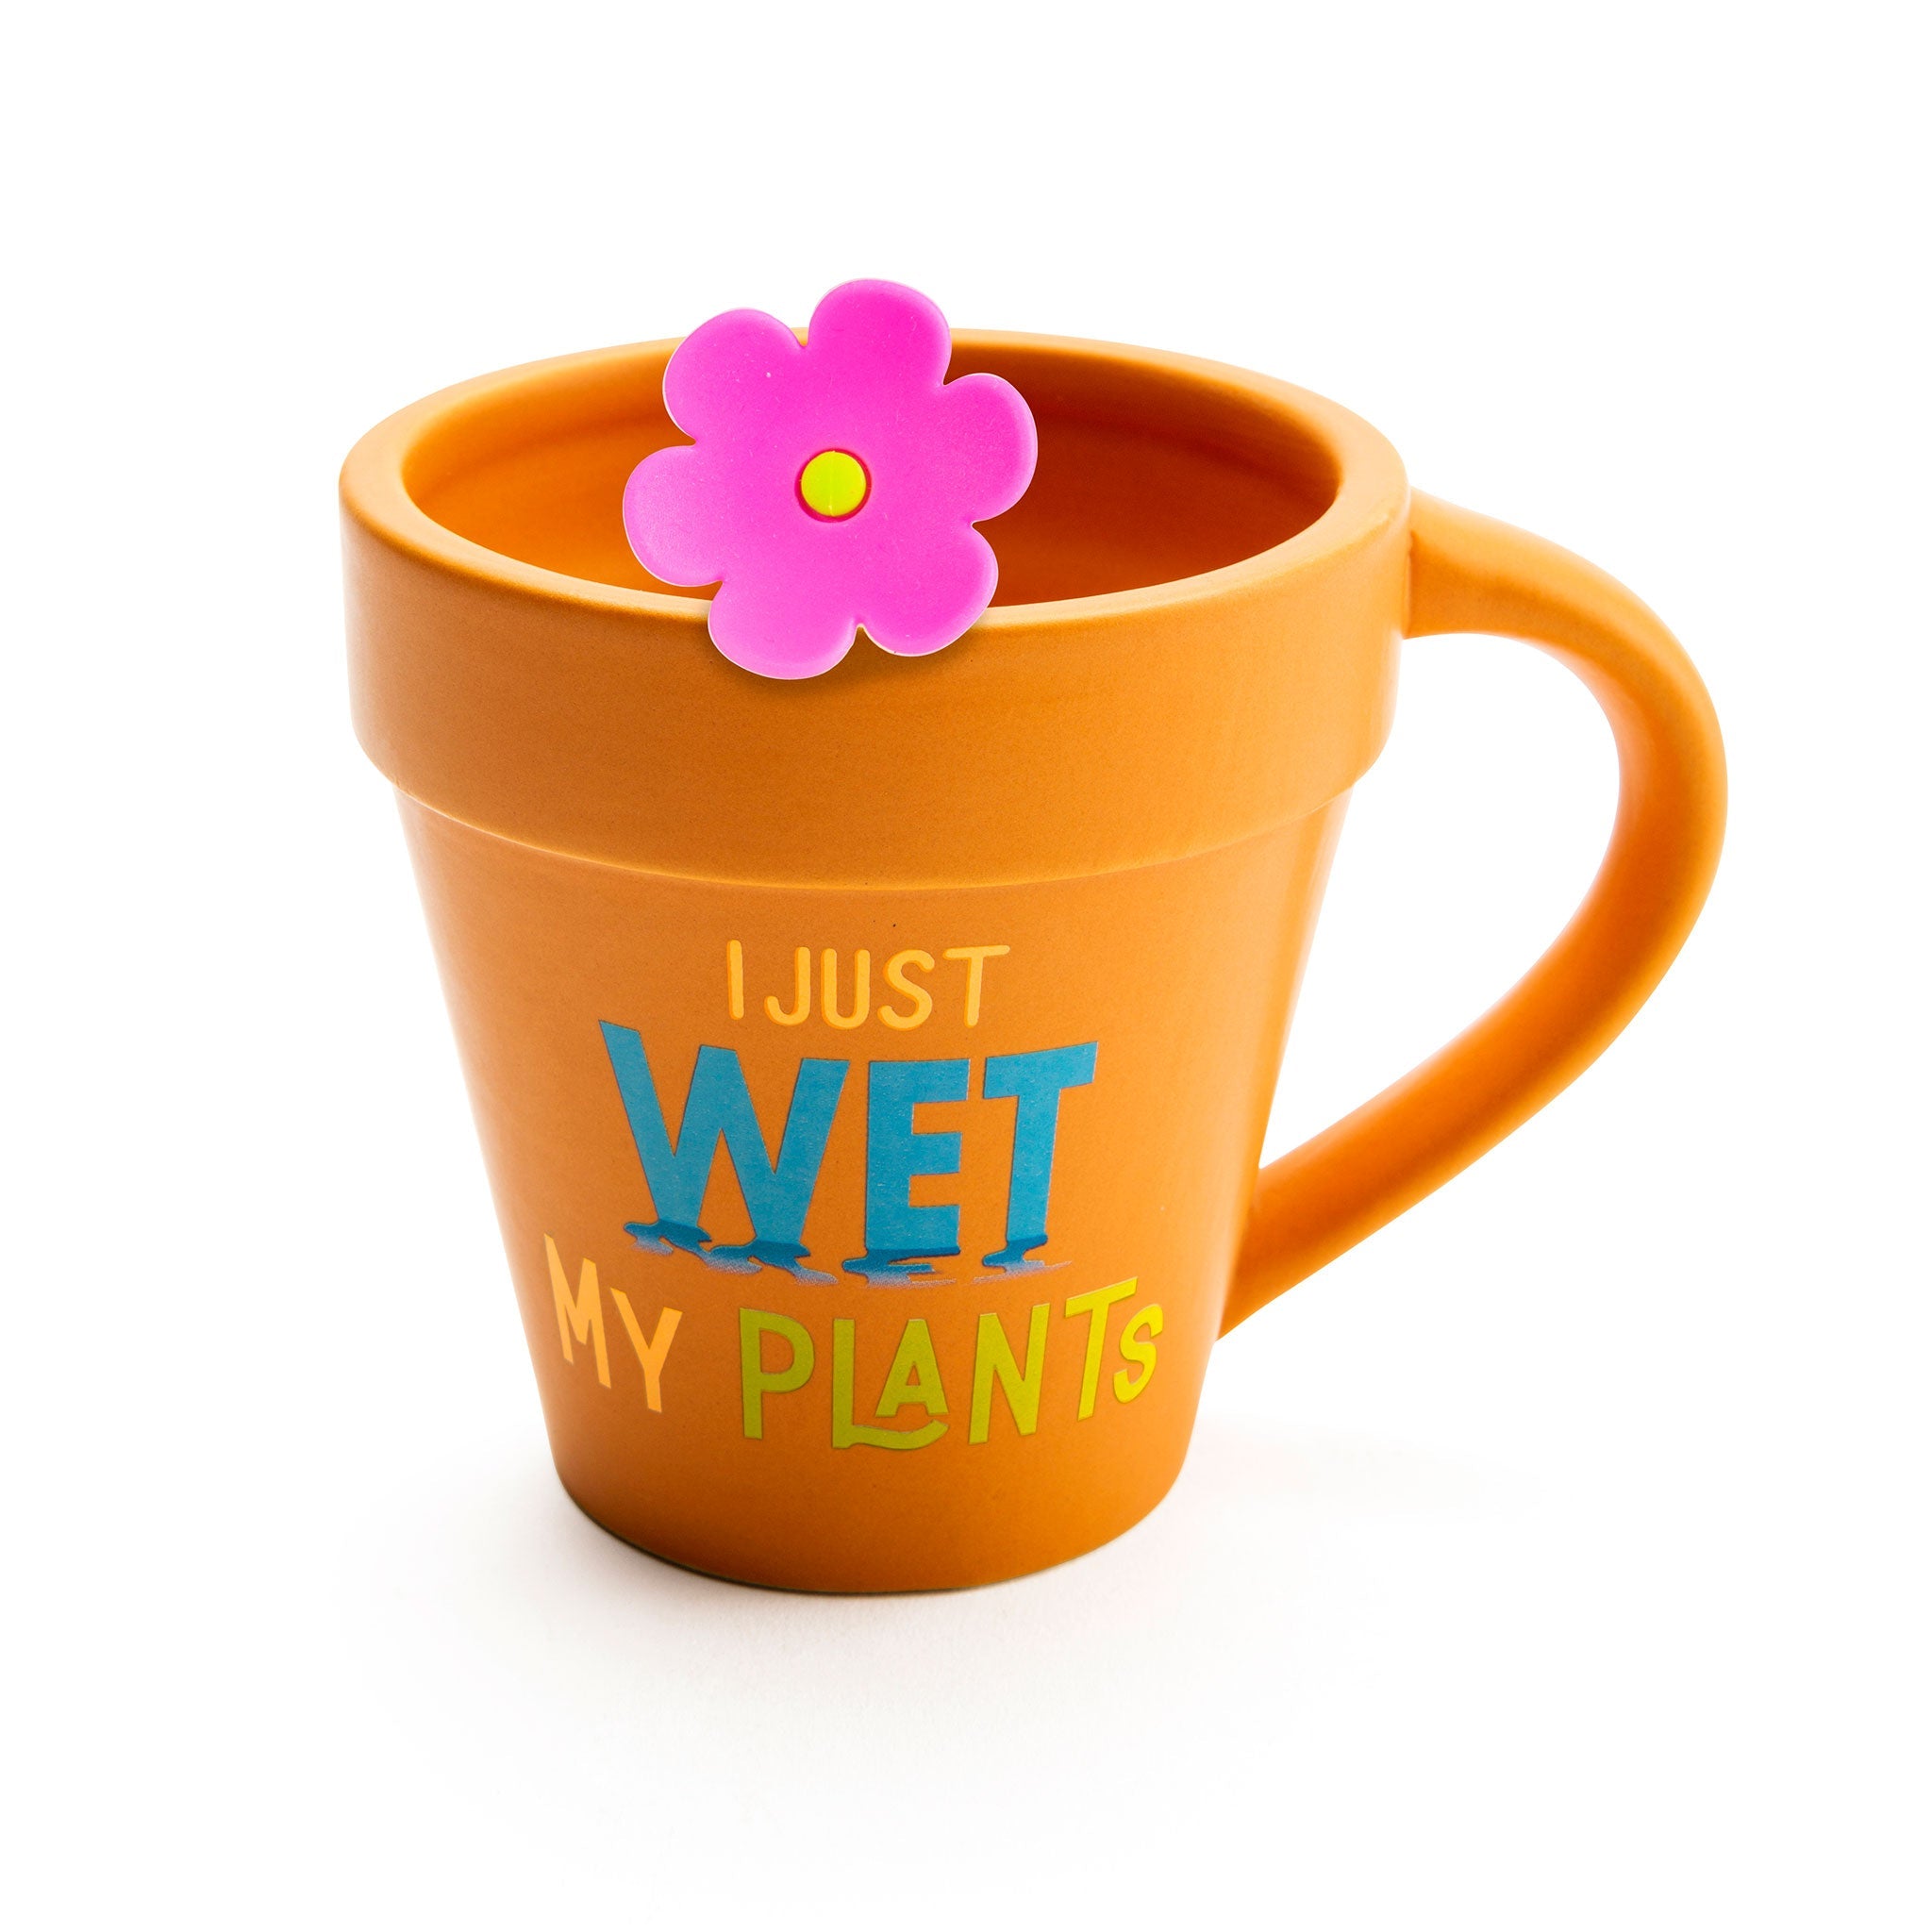 I Just Wet My Plants! - Tea Infuser Mug Set